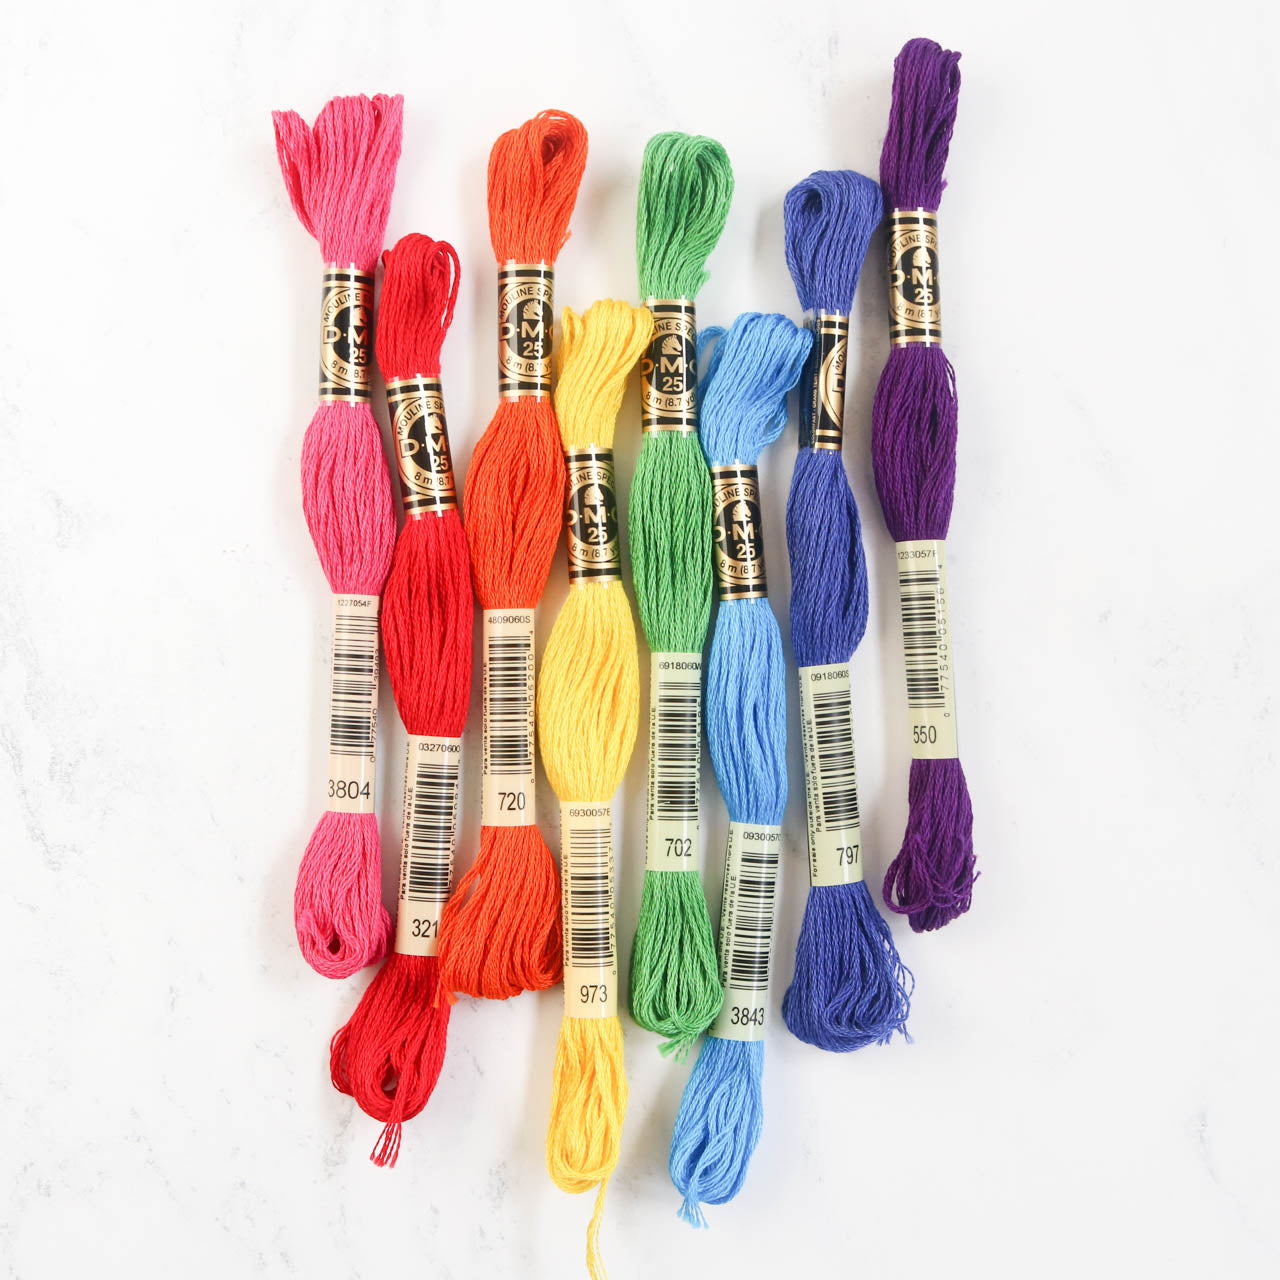  Premium Rainbow Color Embroidery Floss bobbins - Cross Stitch  Threads - Friendship Bracelets Floss - Crafts Floss - 20 Bobbins Per Pack  Embroidery Floss, Medium Rose Gradient : Health & Household